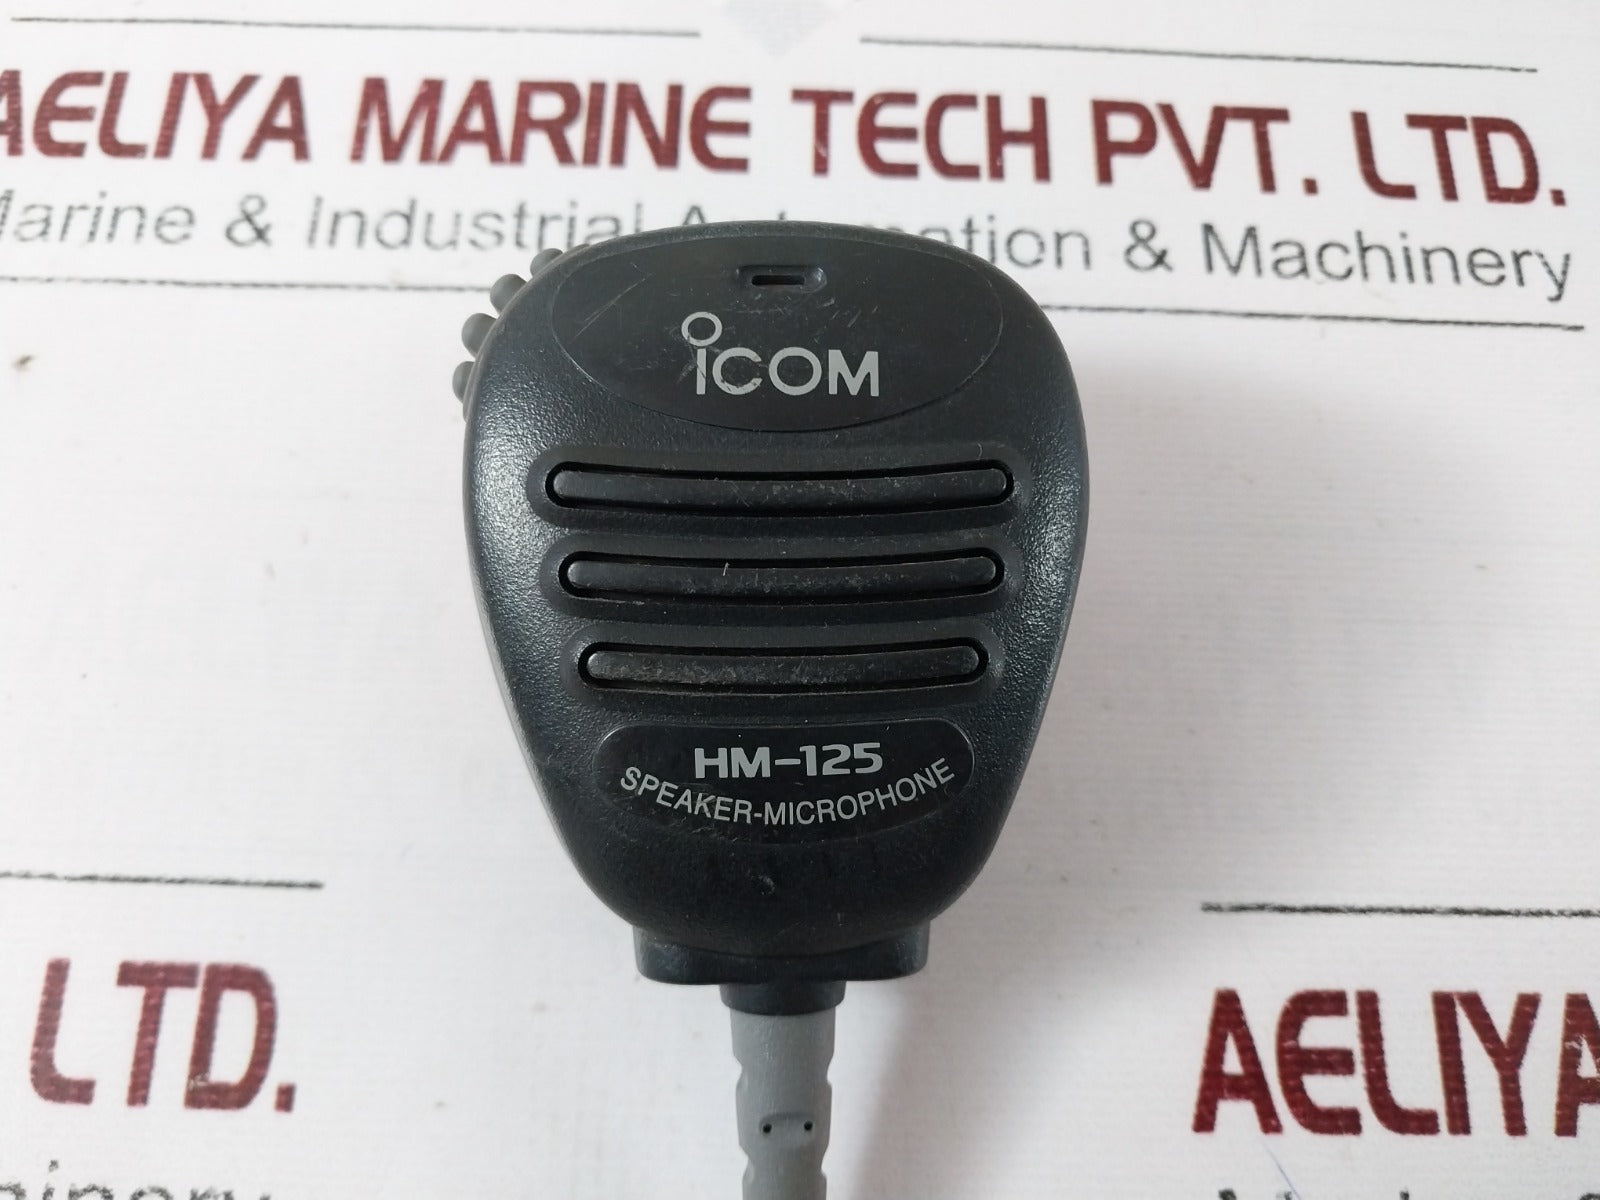 Icom Hm-125 Speaker-microphone